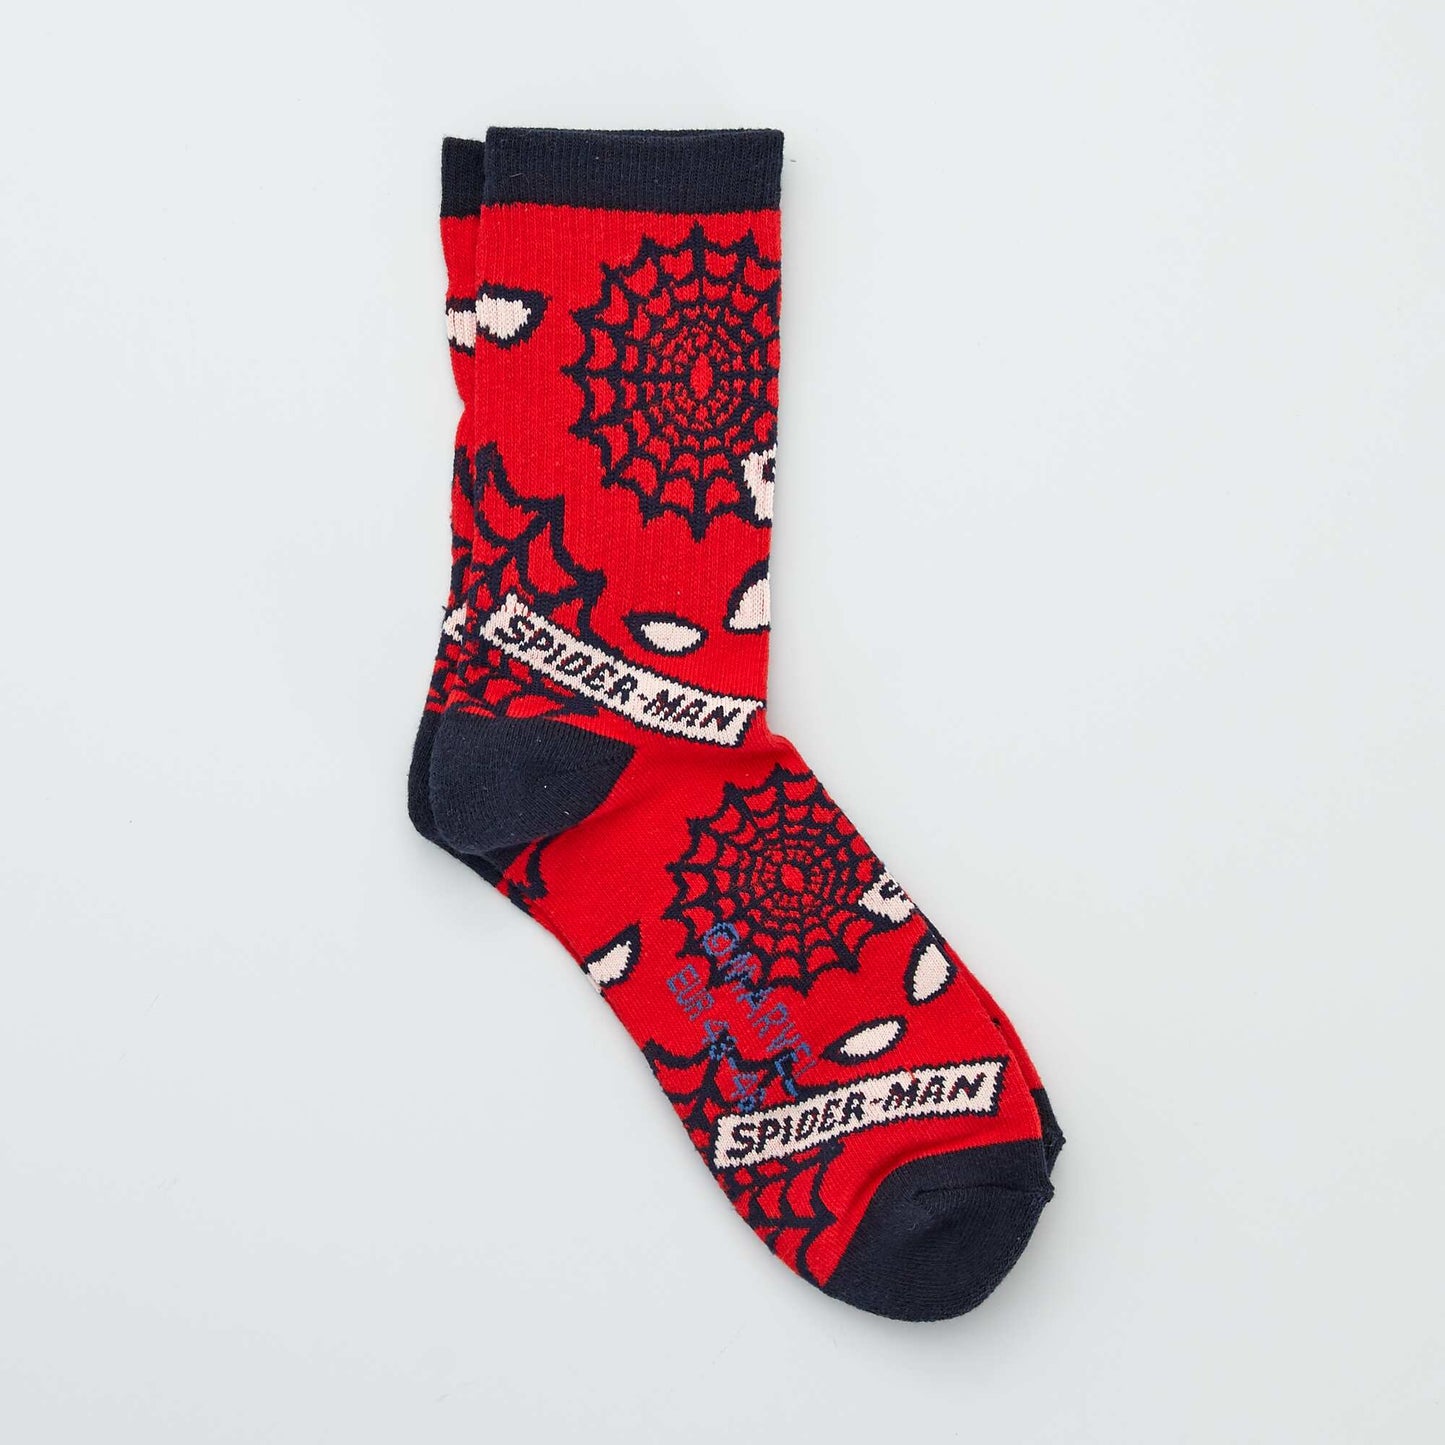 Pack of 3 pairs of Spiderman socks RED